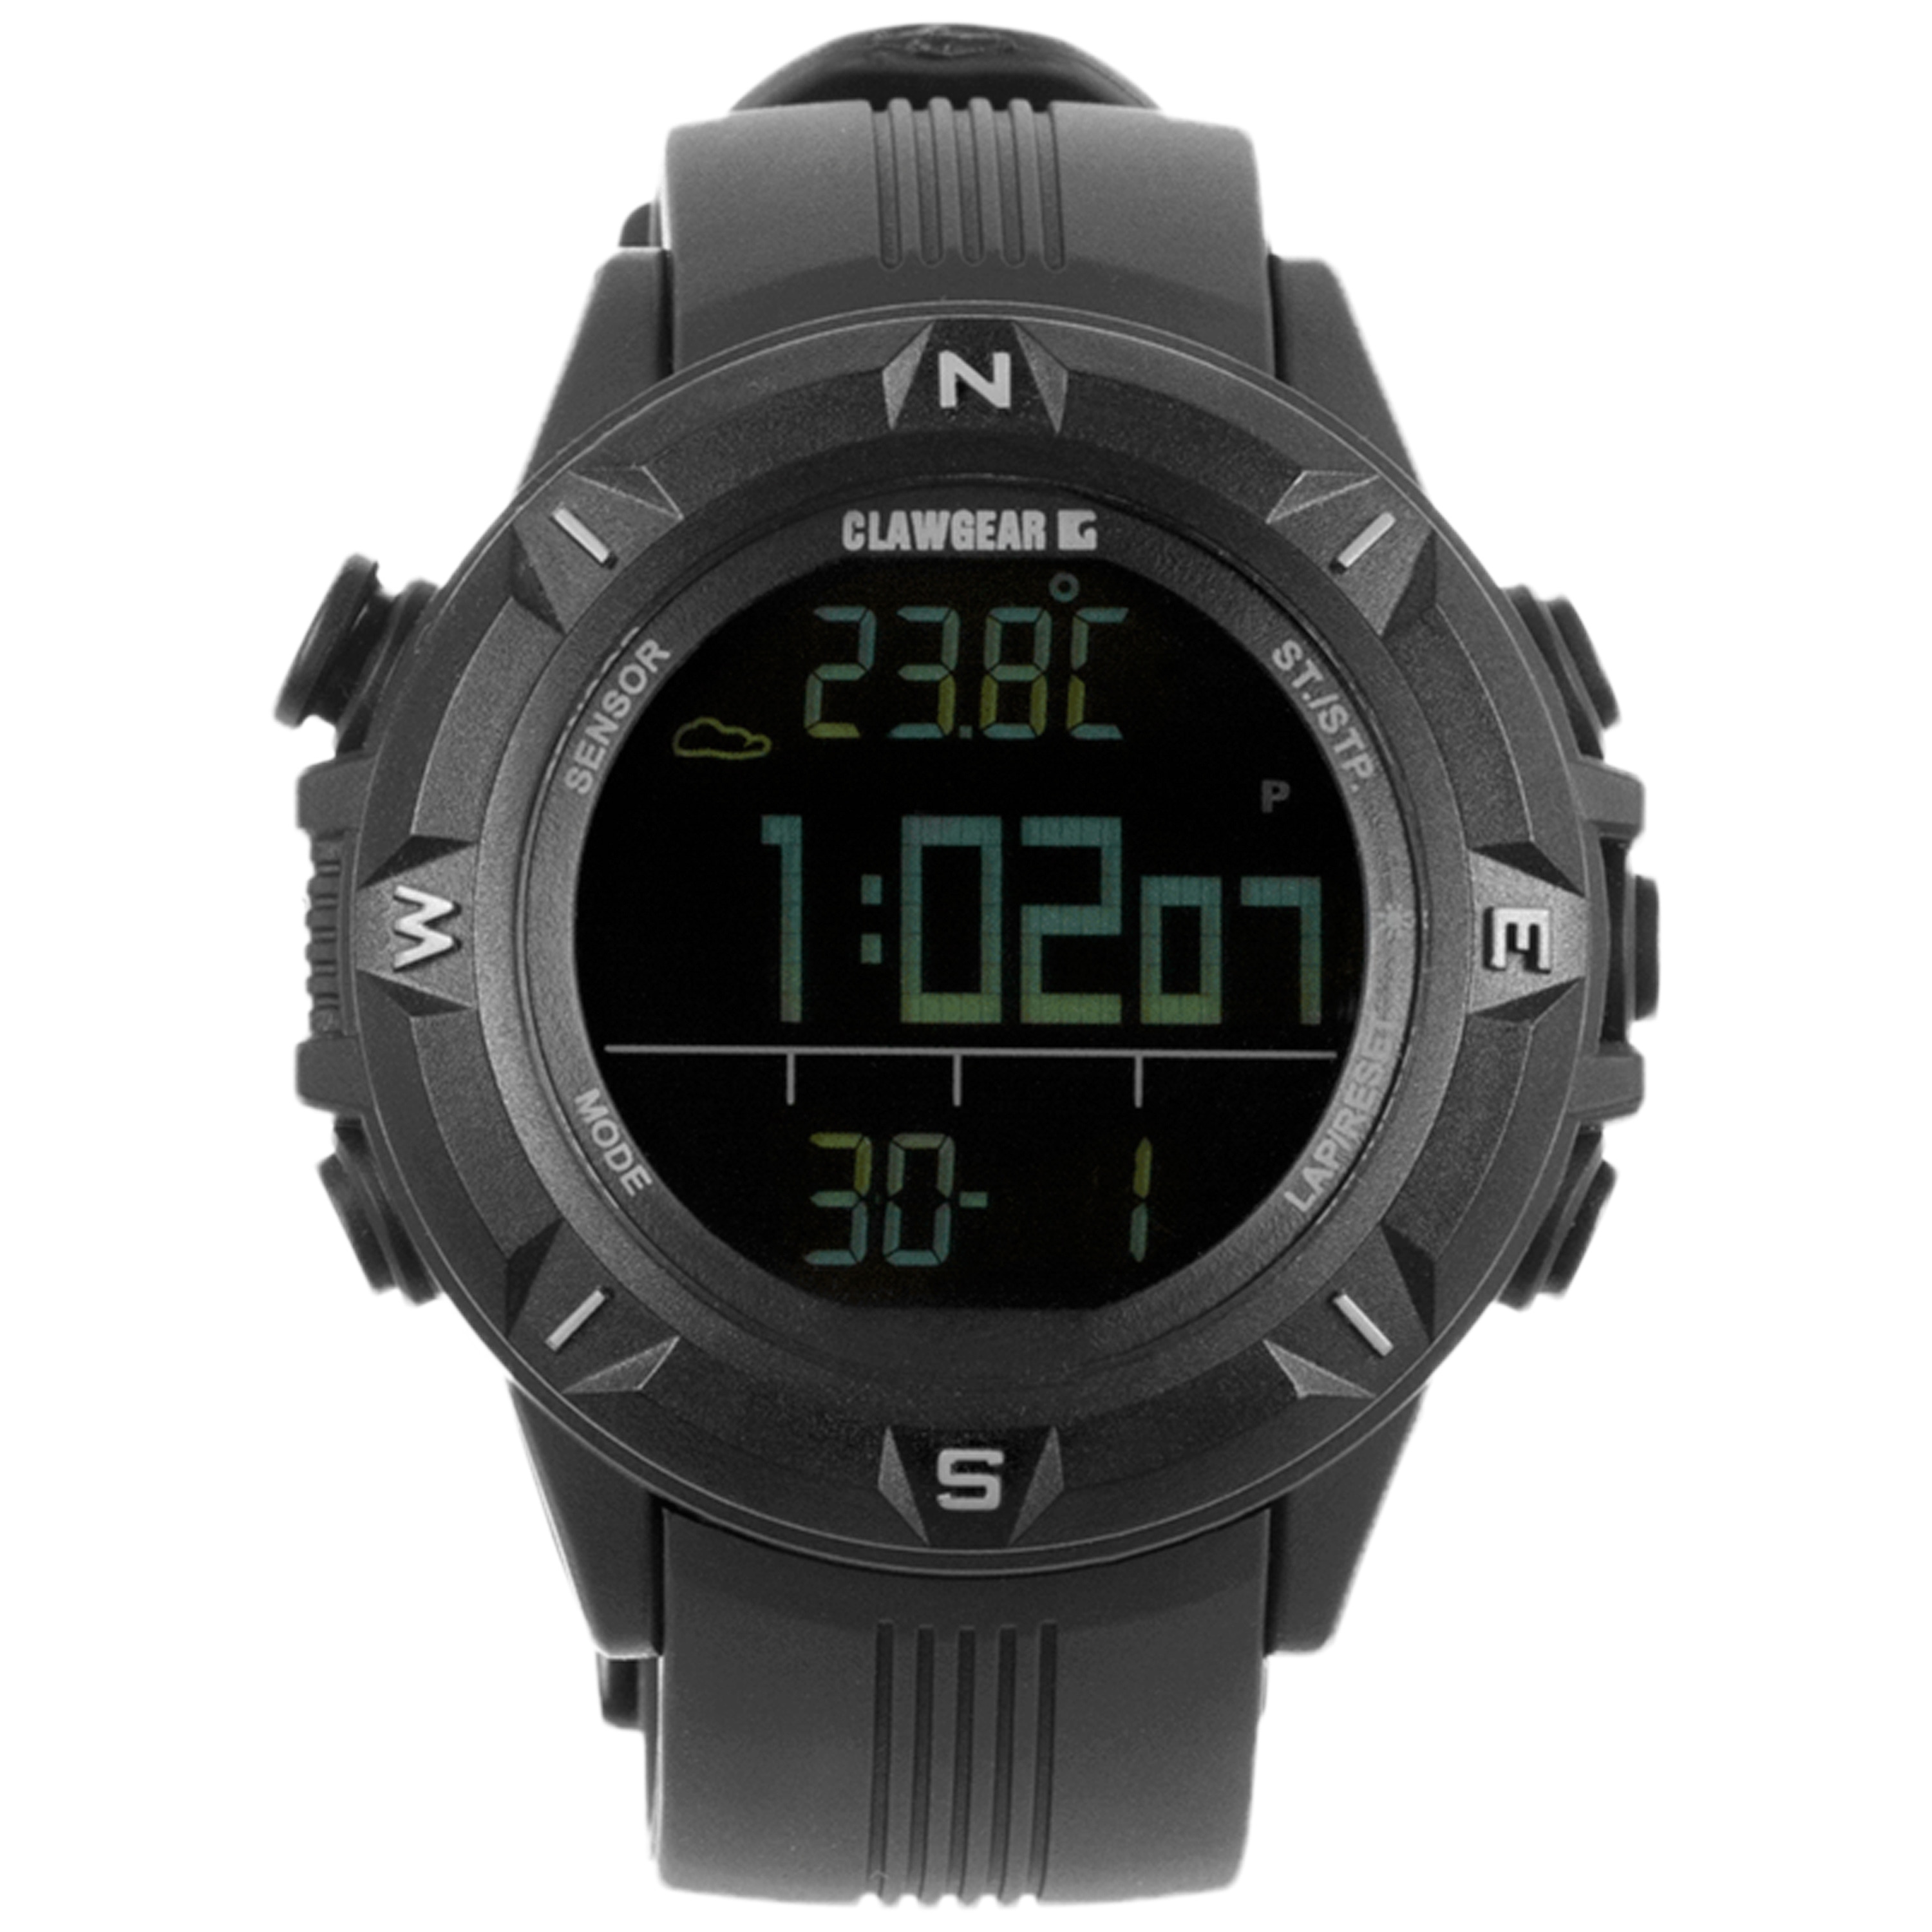 Purchase the ClawGear Wrist Watch Mission Sensor II black by ASM